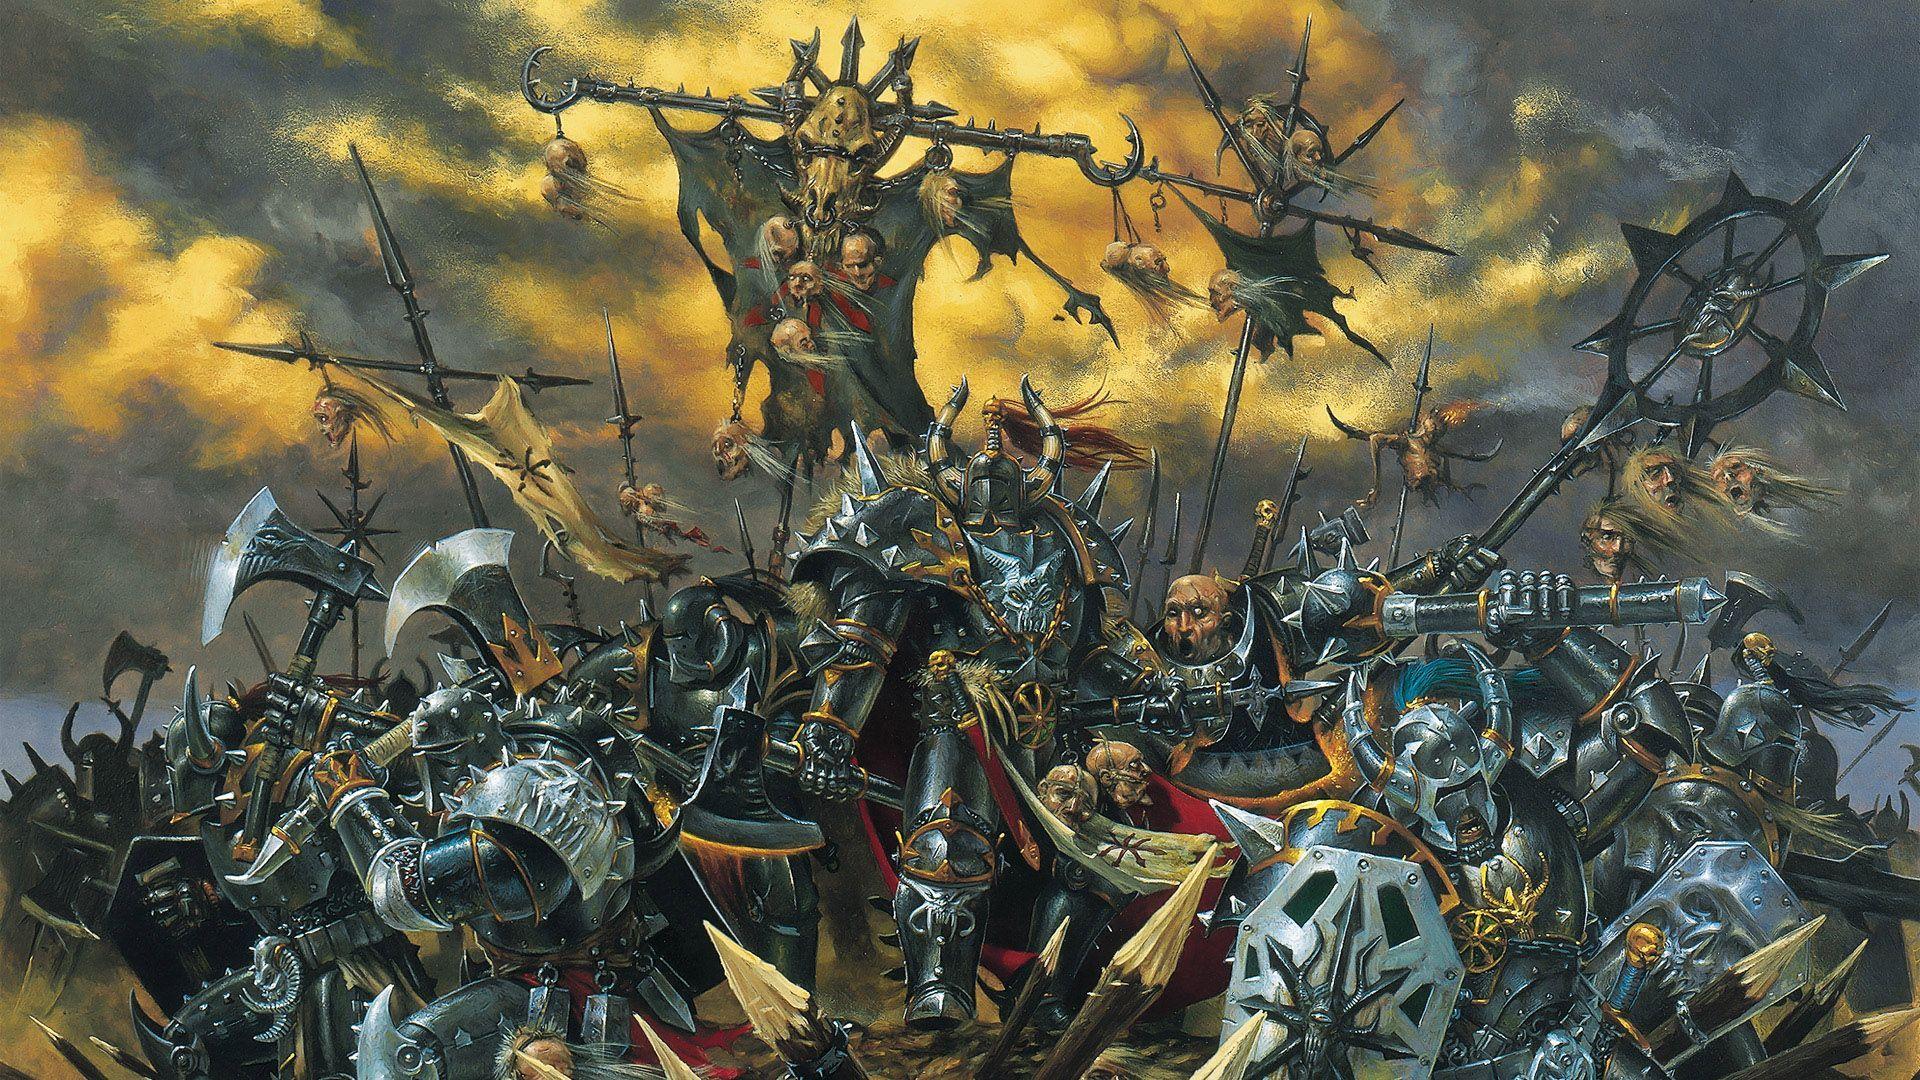 Warhammer Wallpaper. Warhammer art, Warhammer fantasy, Fantasy art